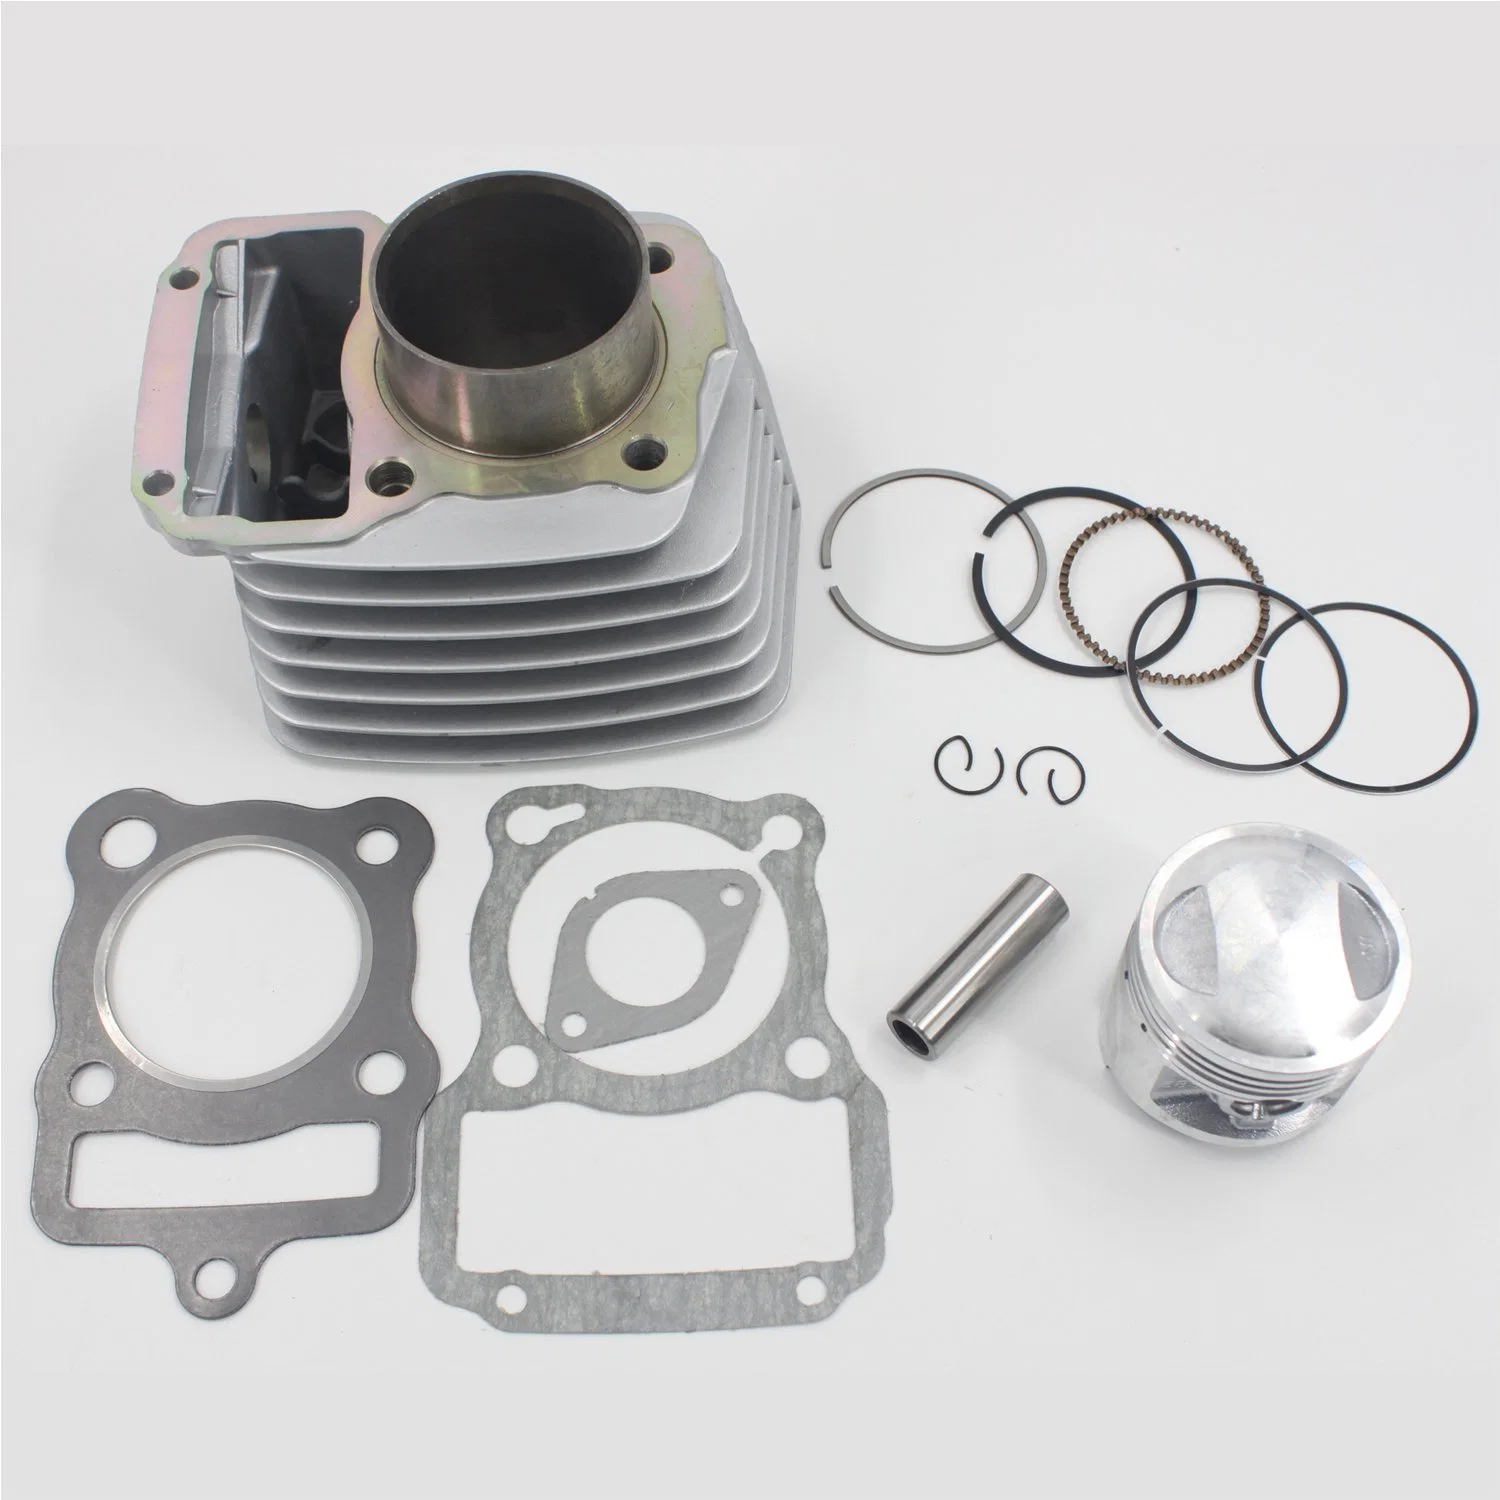 Motorcycle Spare Parts Accessories Morex Genuine Piston Kit and Block Cylinder for CG-125 Engine Honda Suzuki YAMAHA Bajaj